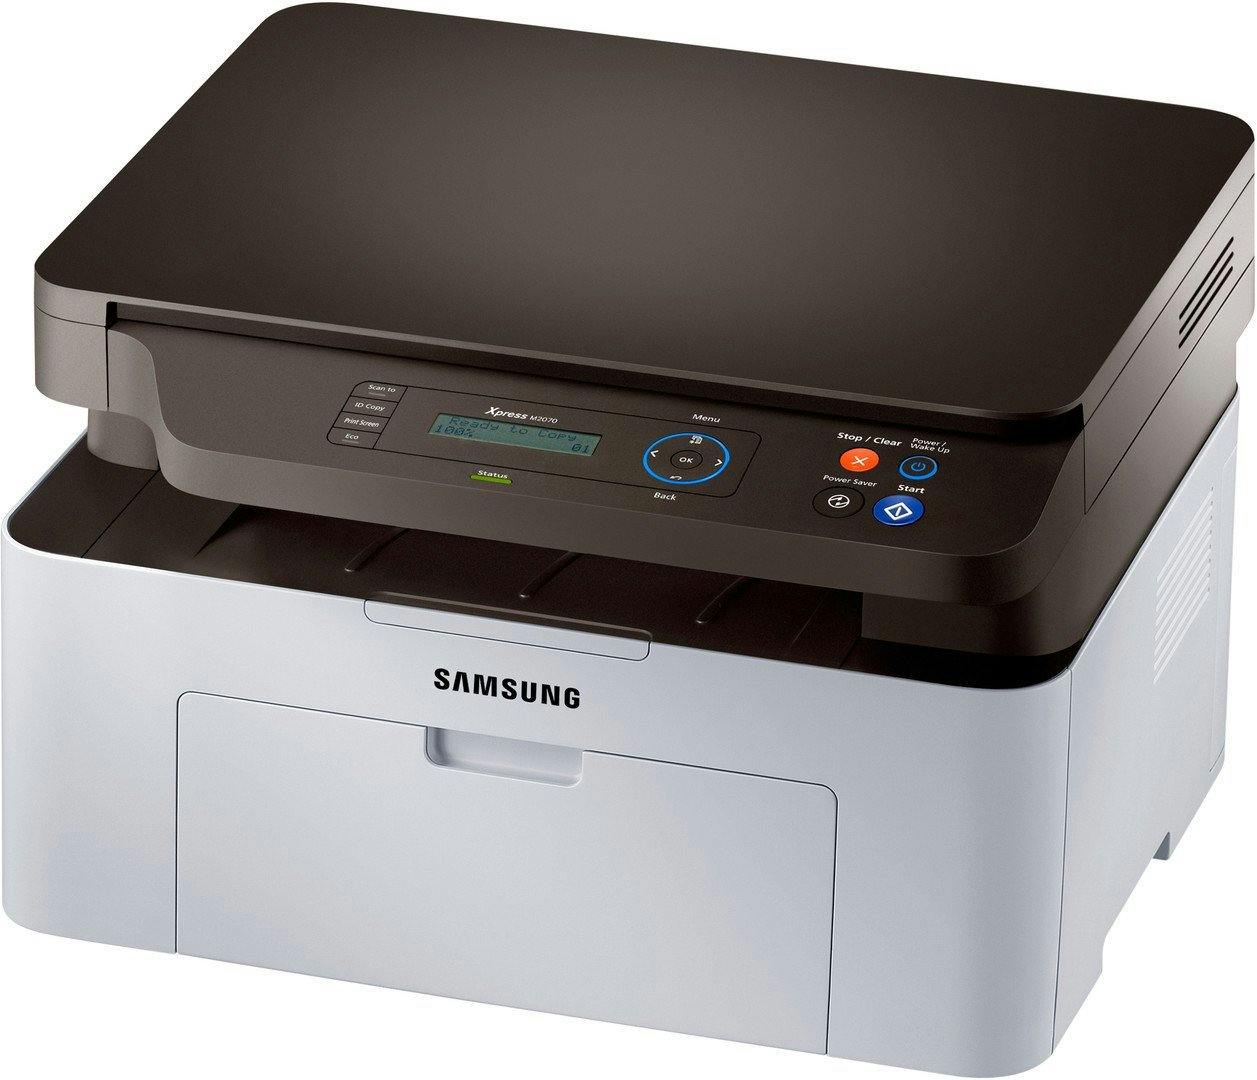 Using a Samsung M2070 Printer on Ubuntu/Linux?